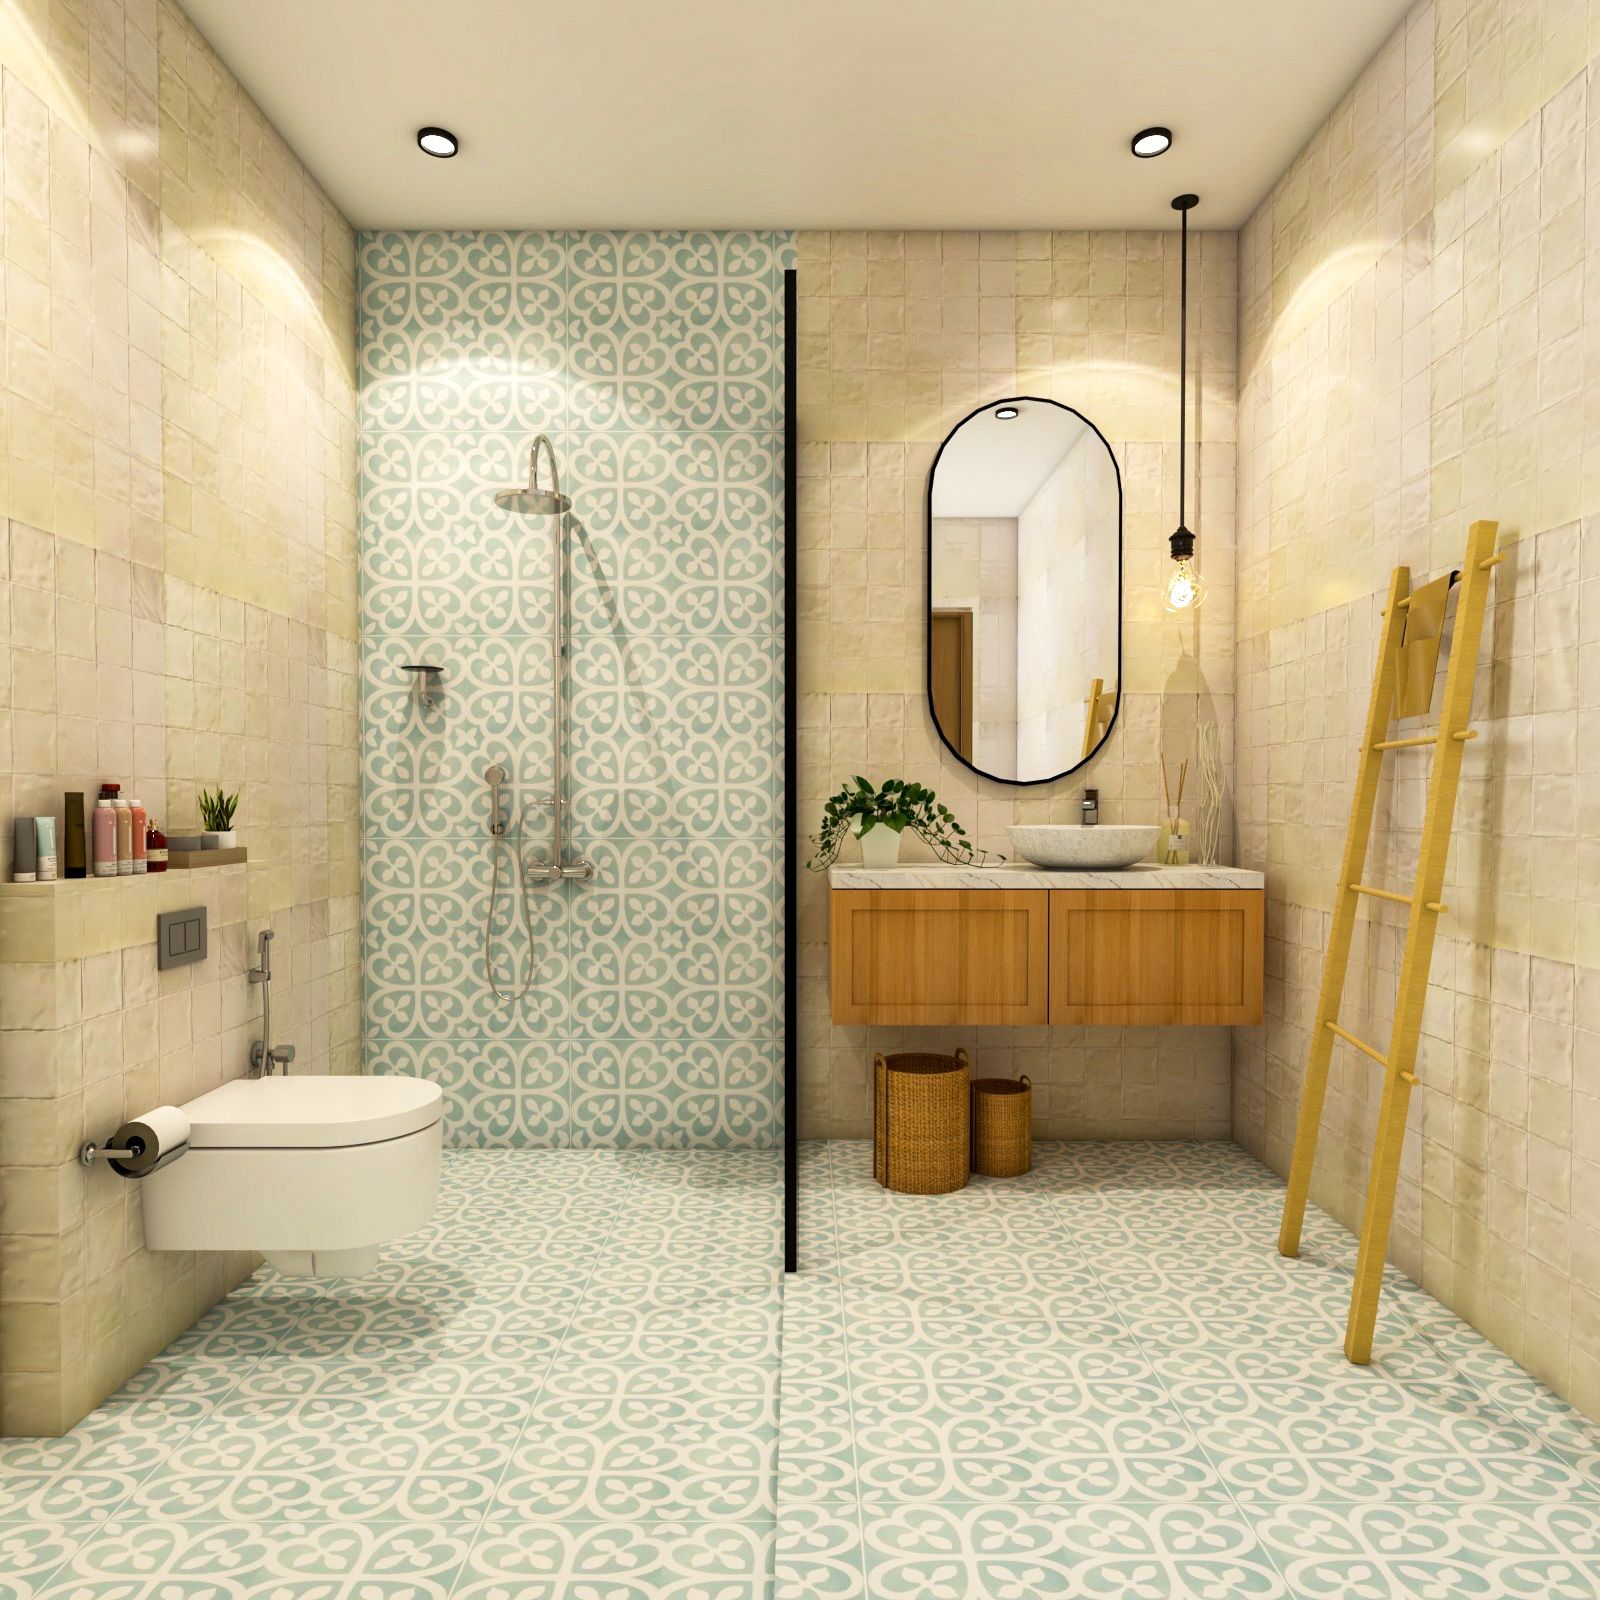 Scandinavian Blue And Cream Bathroom Design With Wooden Bathroom Cabinet